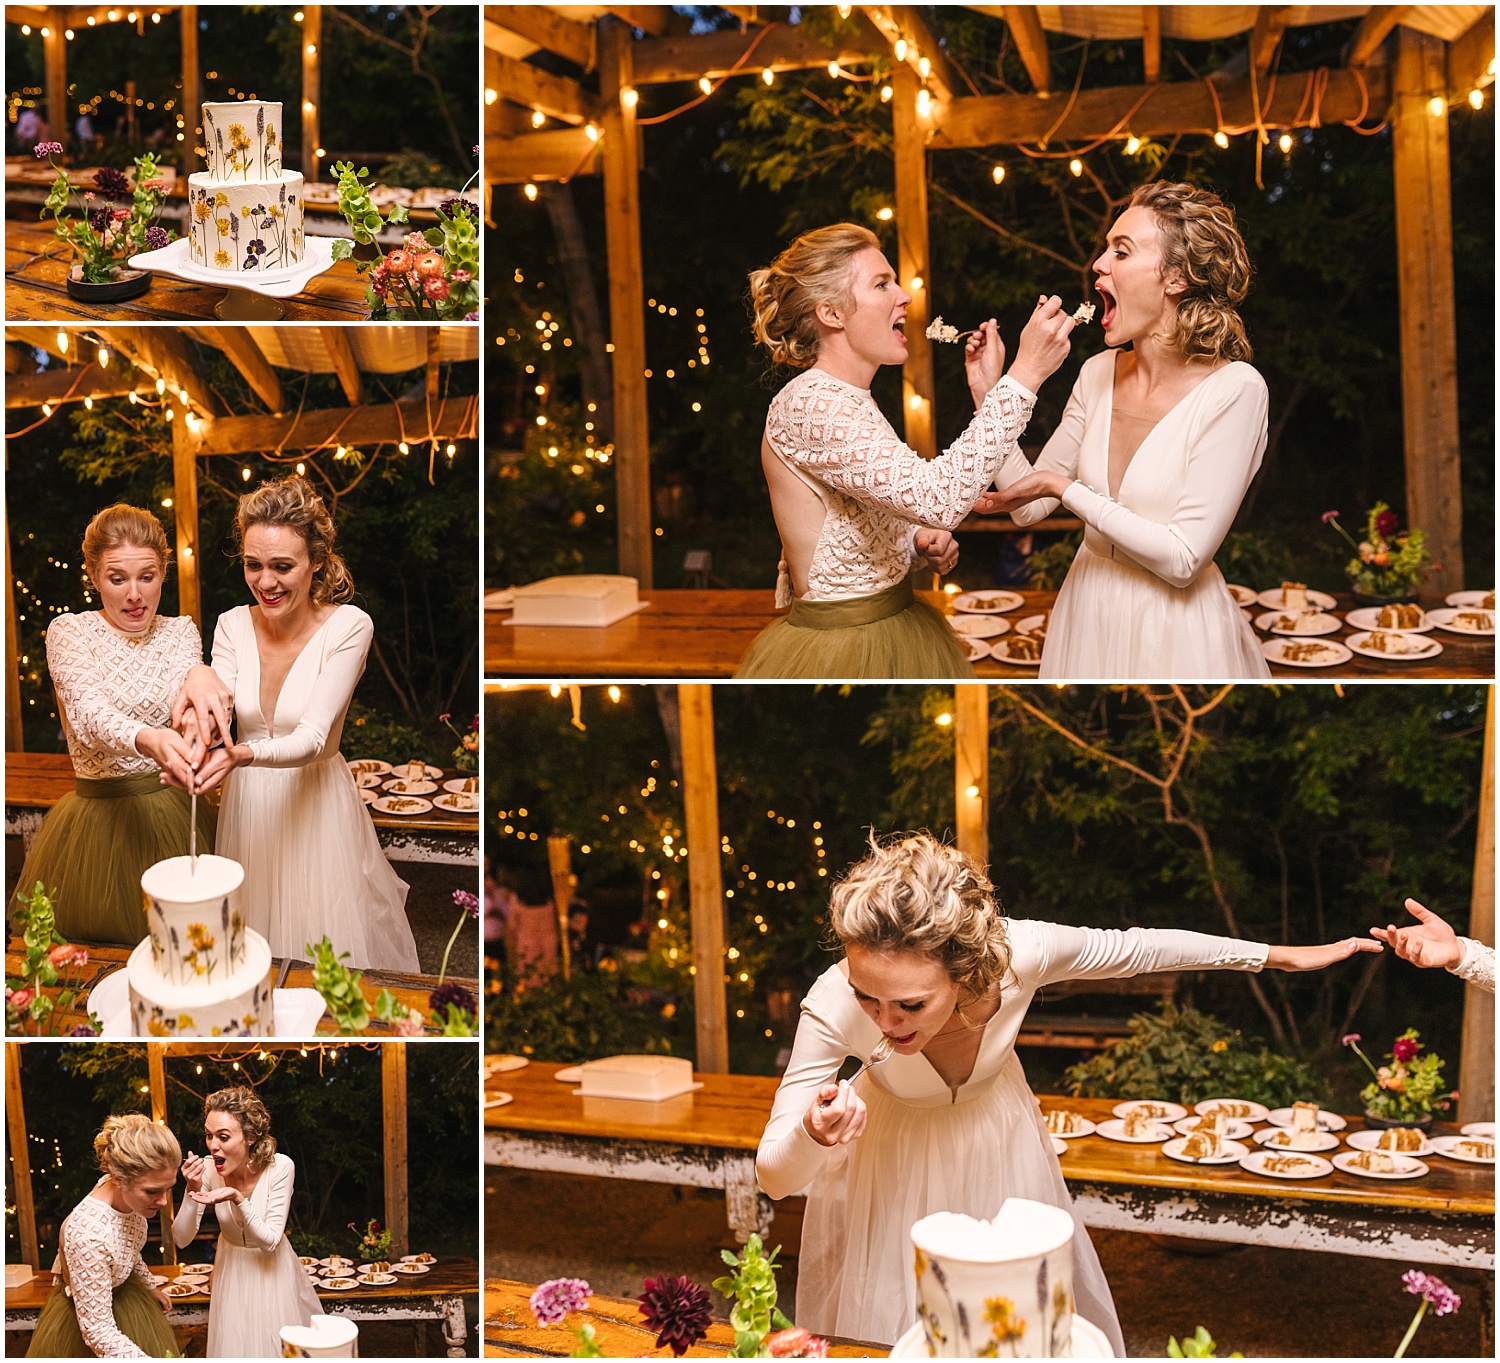 Brides cutting their cake under twinkle lights at enchanted garden wedding reception